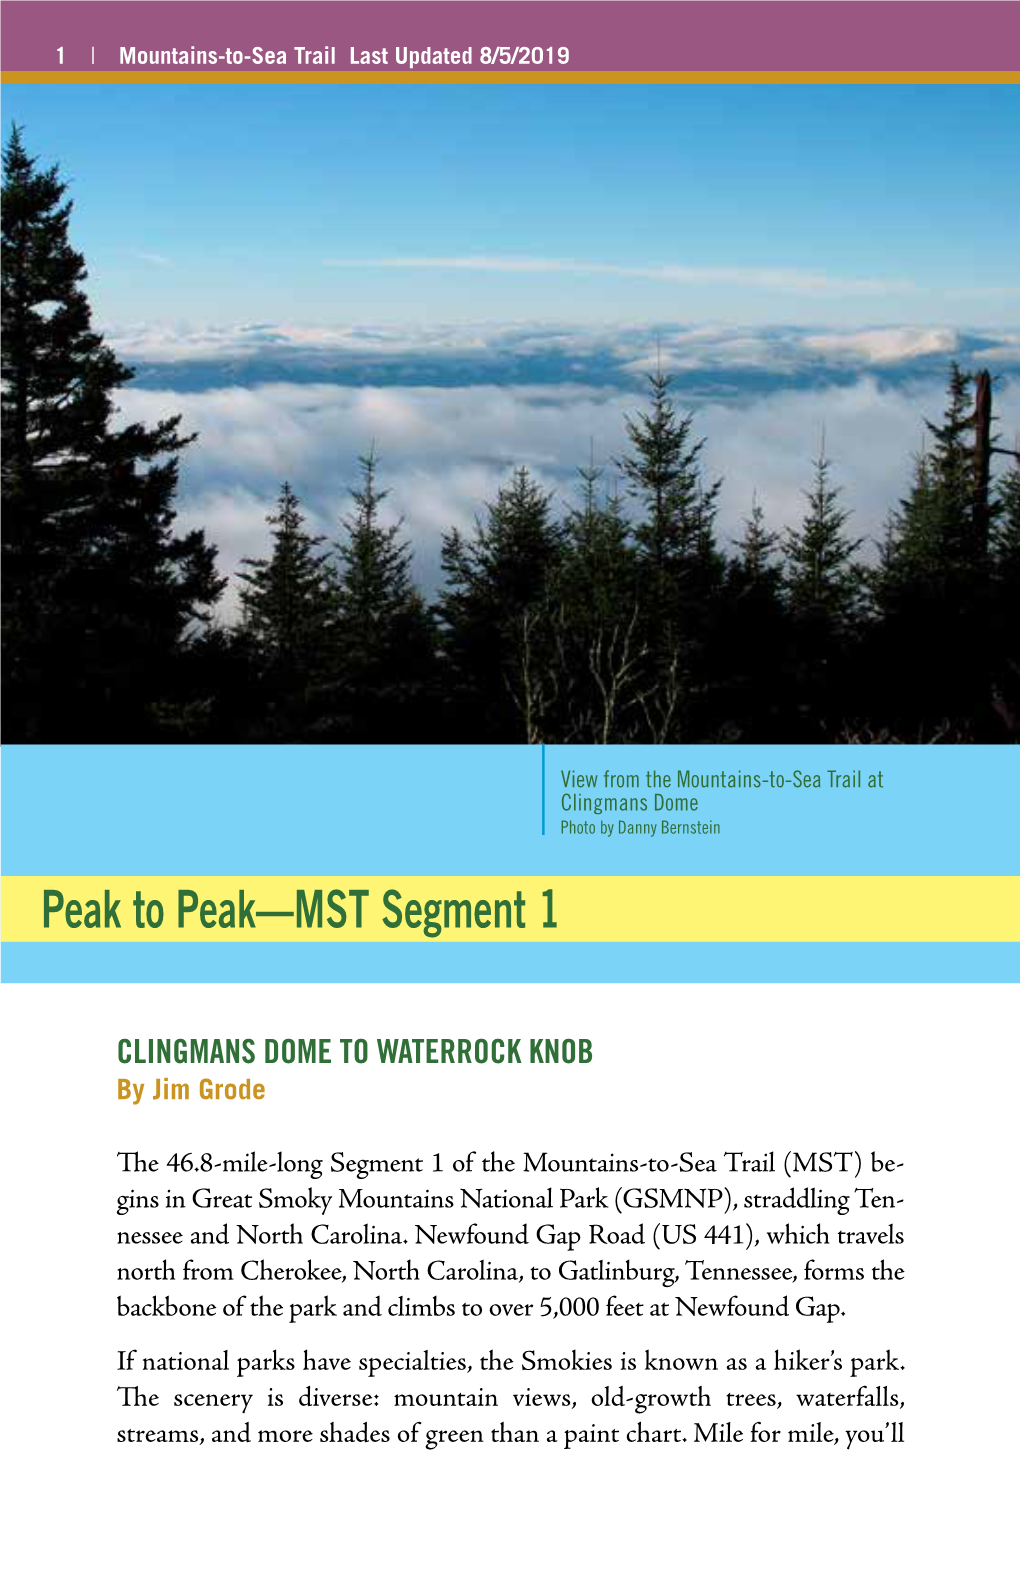 Peak to Peak—MST Segment 1